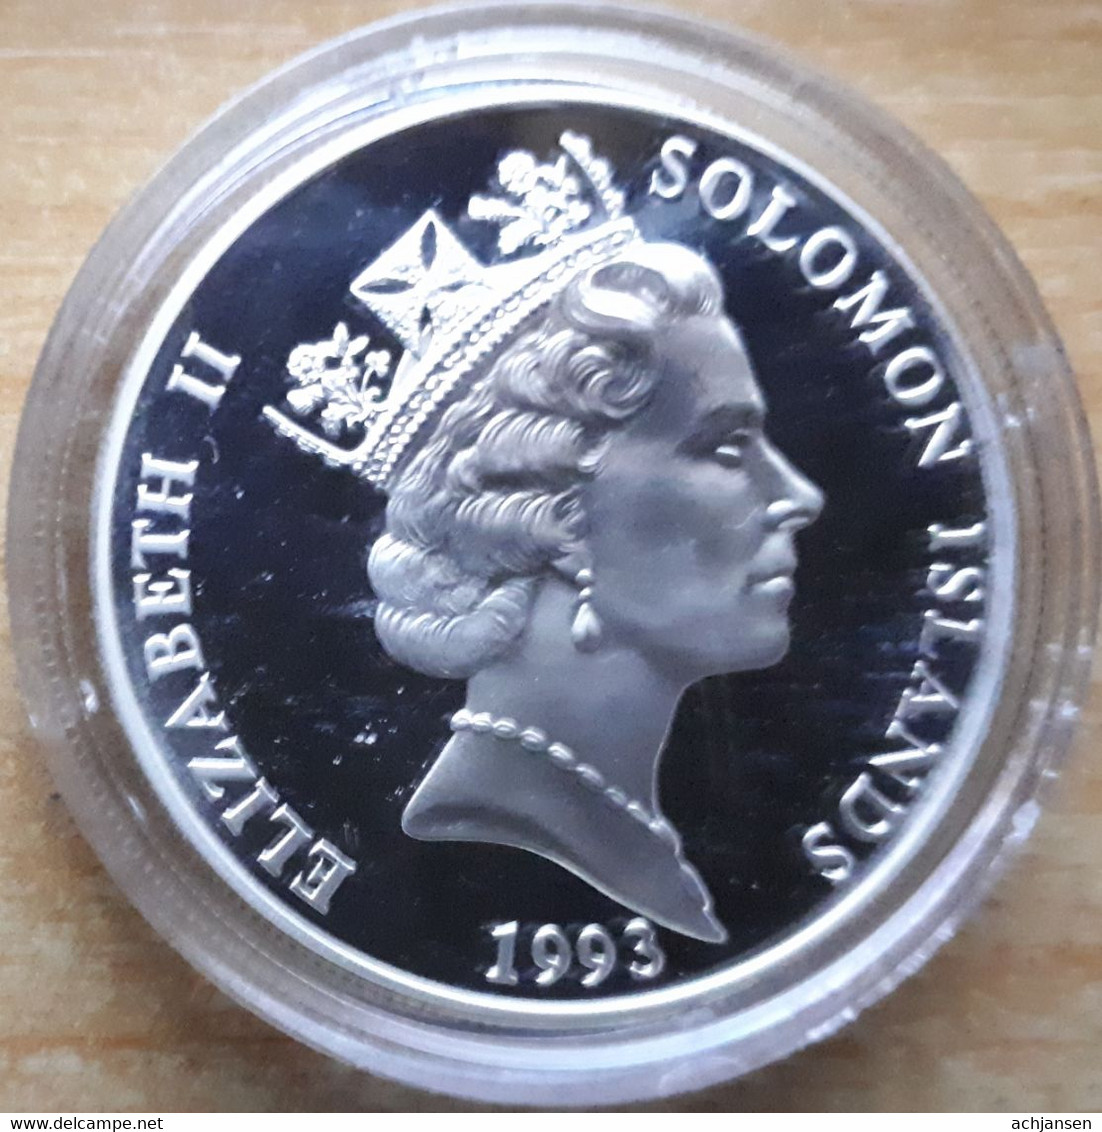 Solomon Islands, 10 Dollars 1993 - Silver Proof - Salomonen